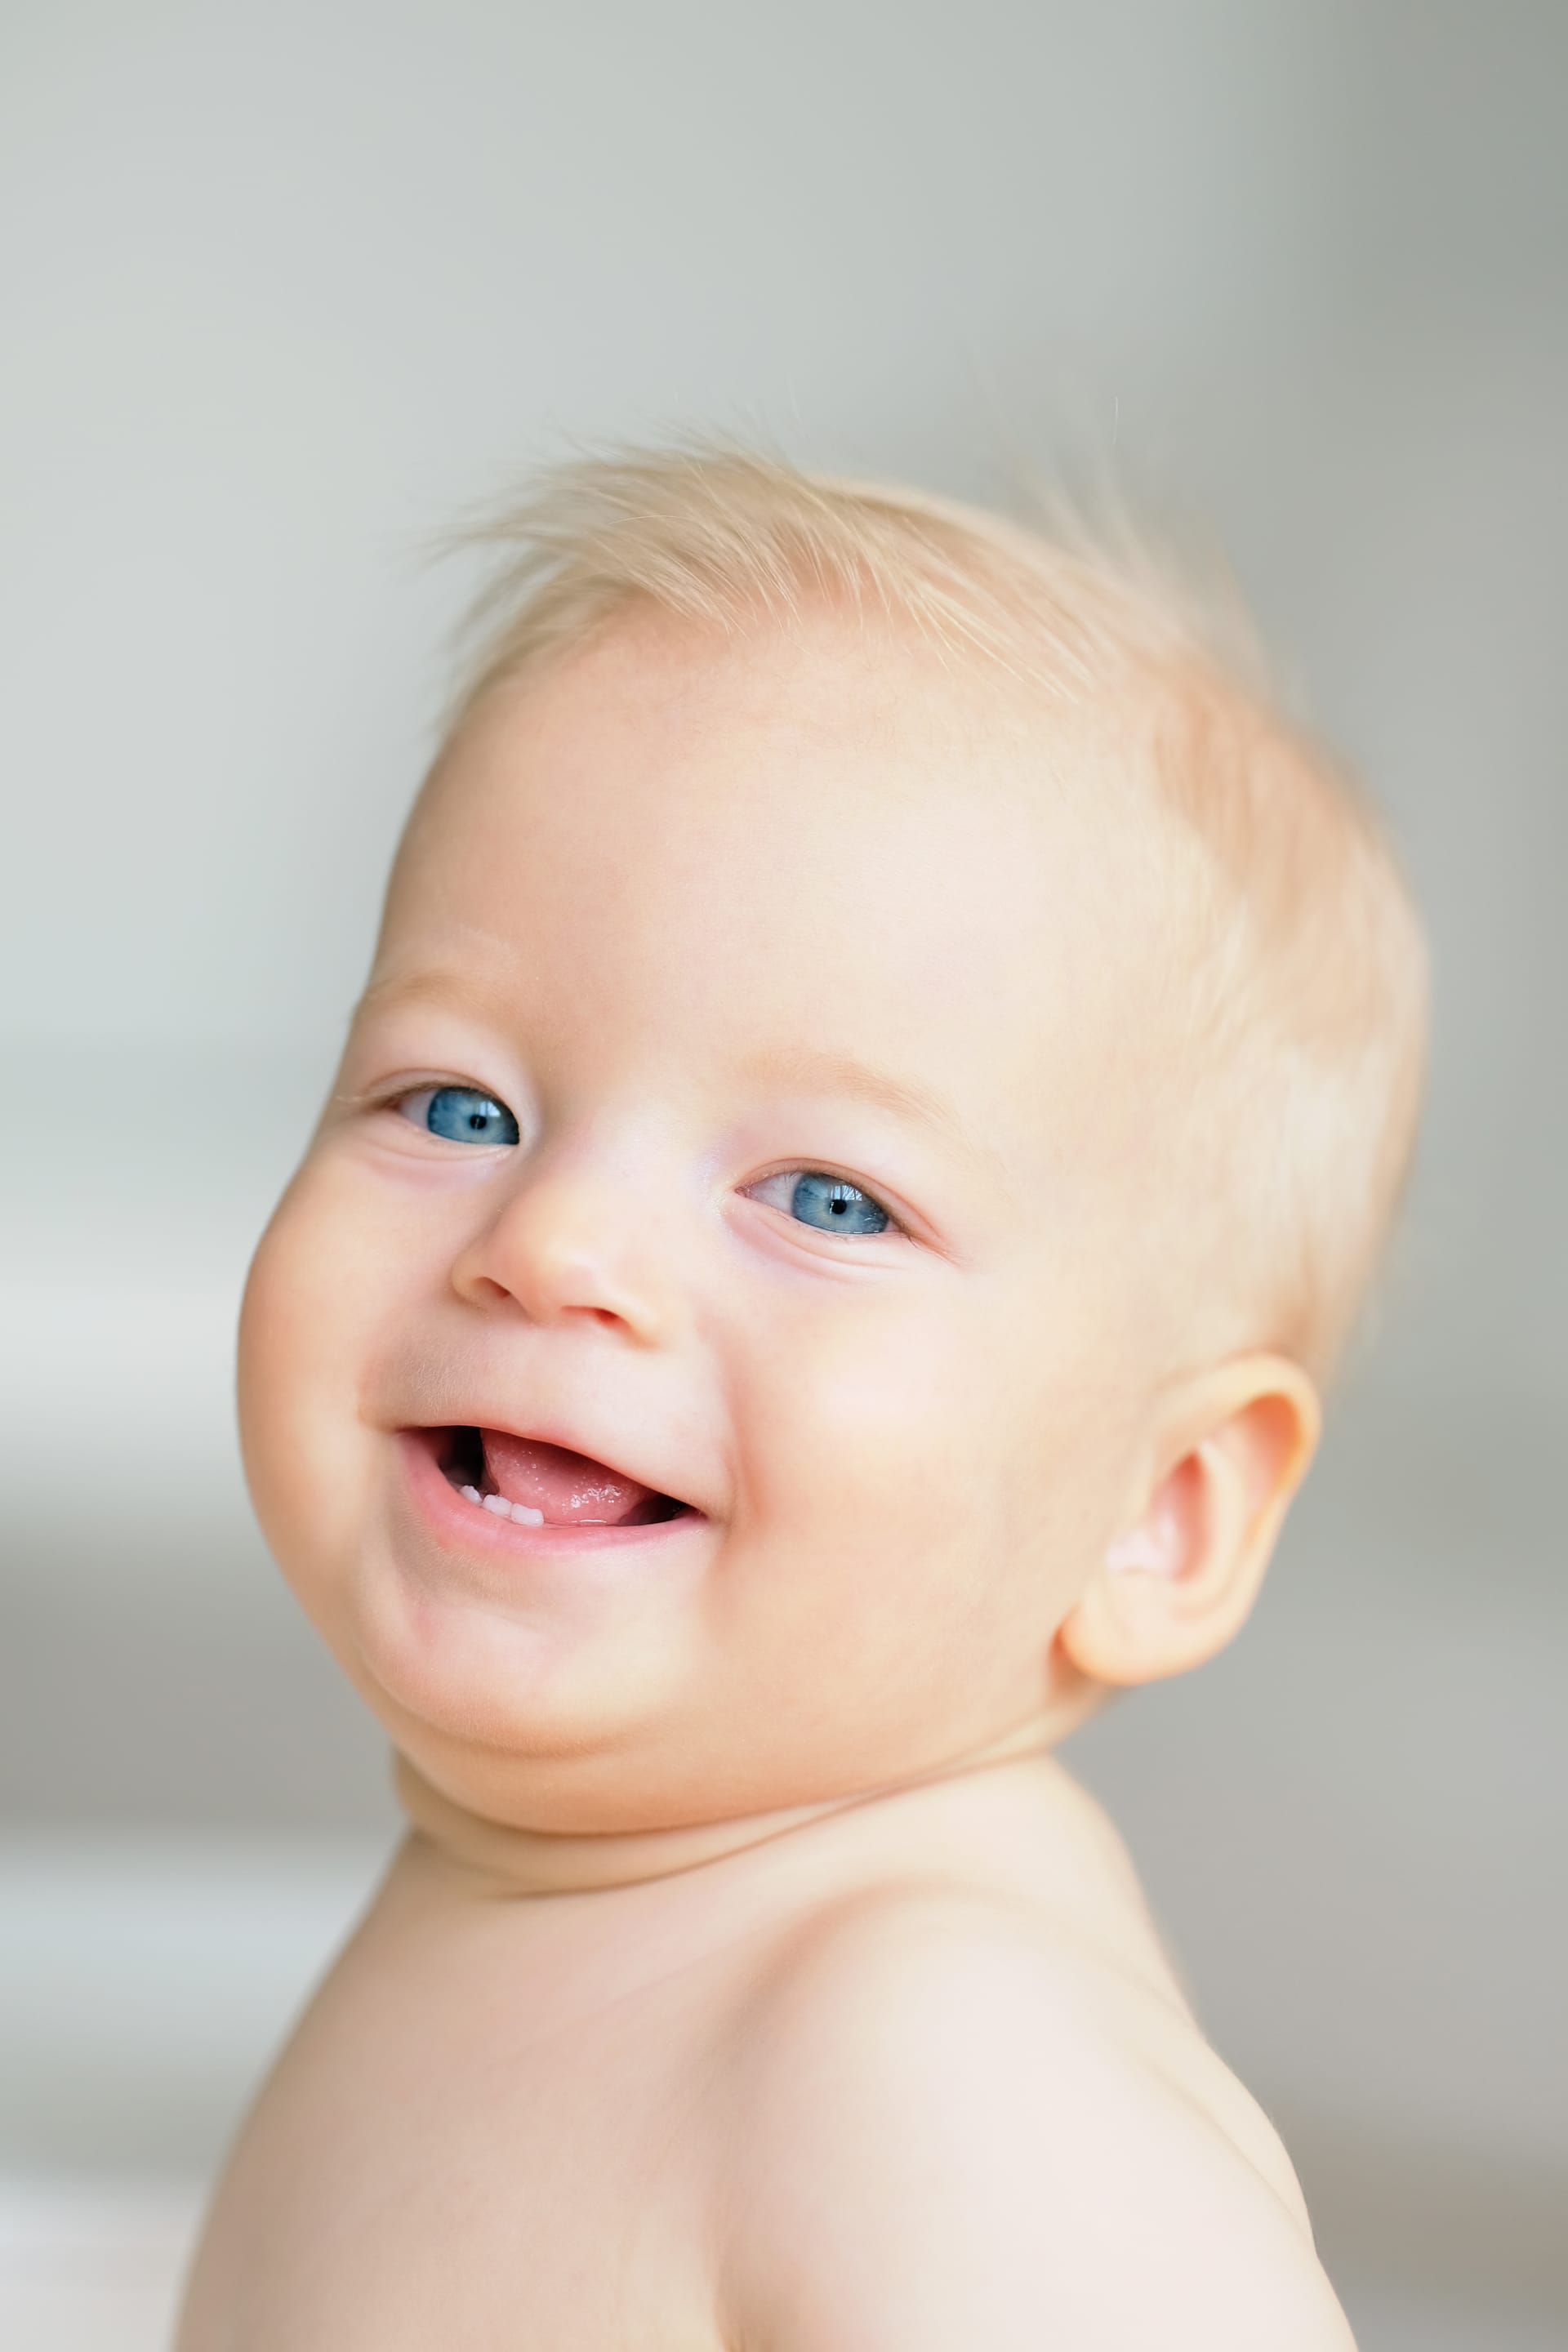 Baby photoshoot boy with blue eyes infant photography